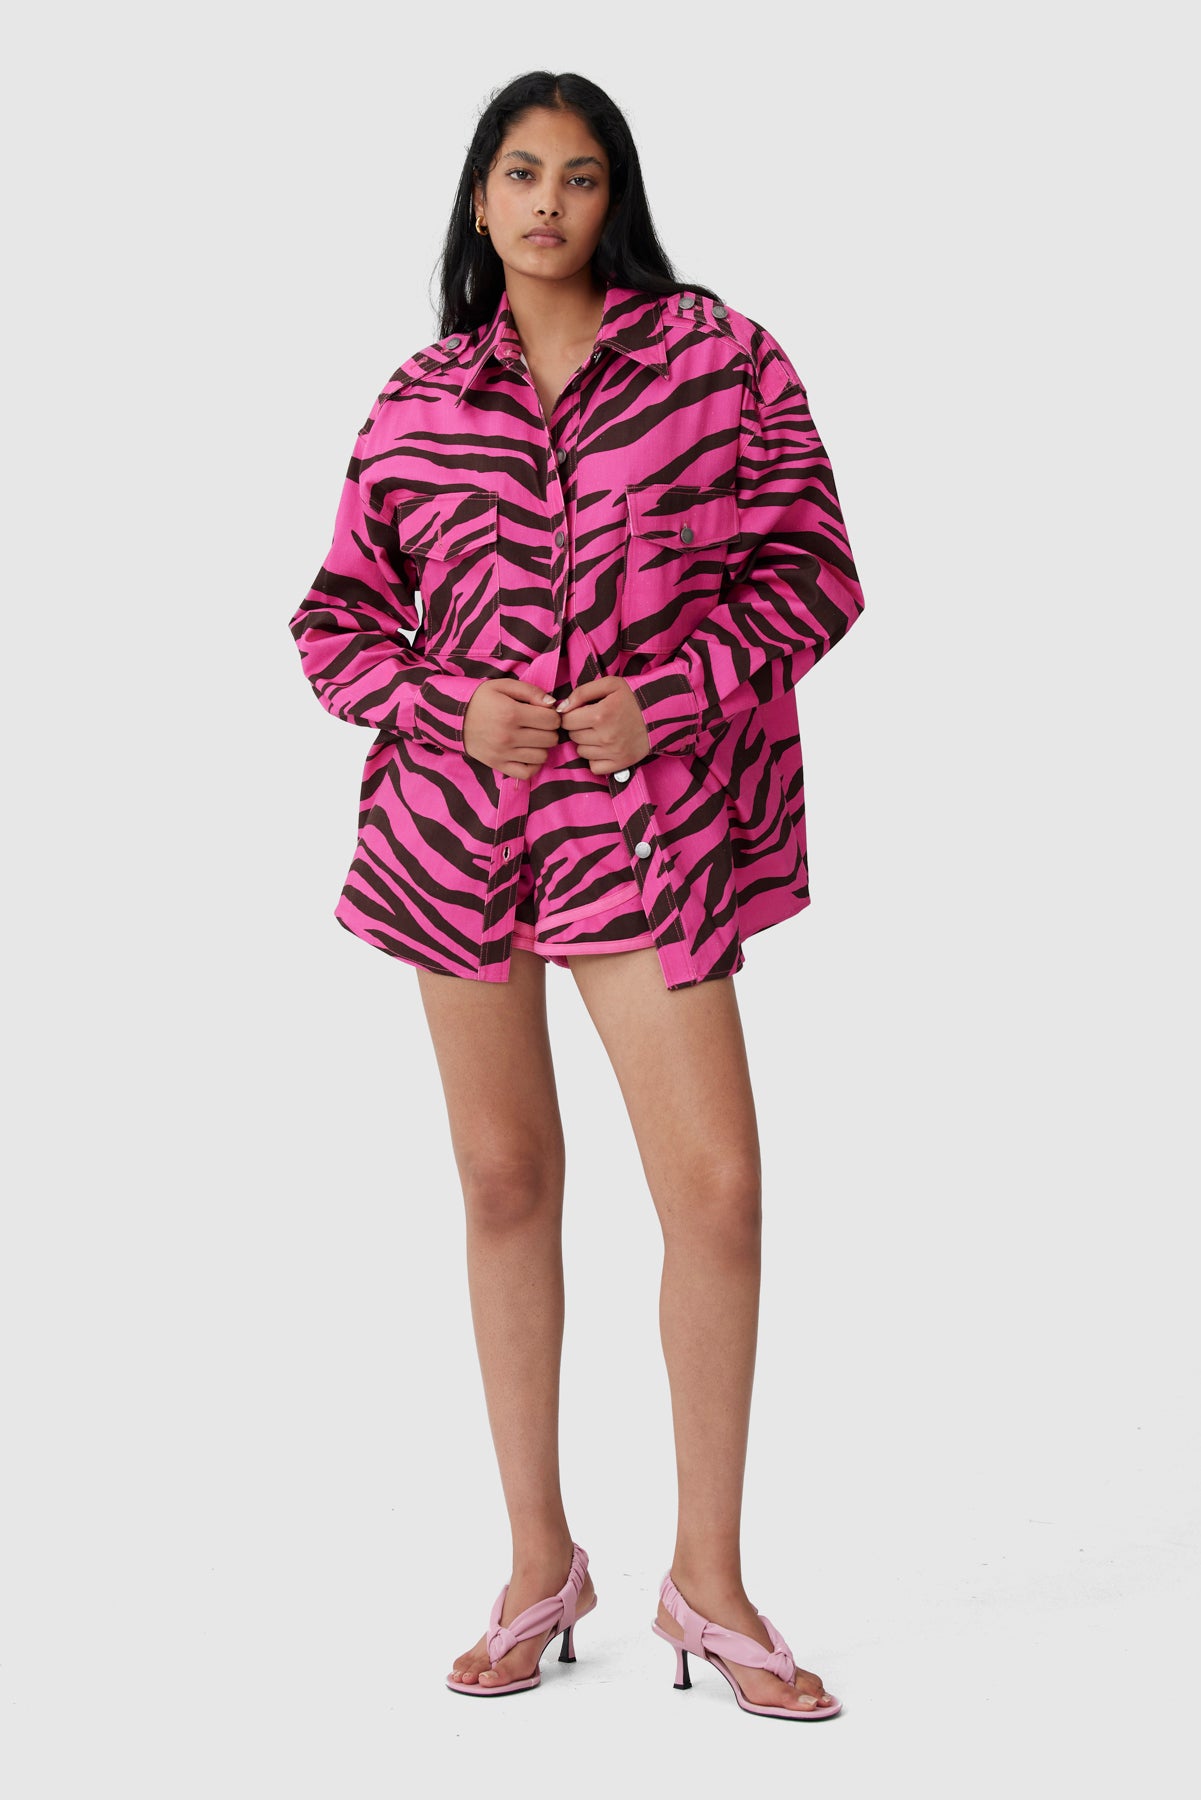 C/MEO Collective - Split Decision Shorts - Pink Animal Print